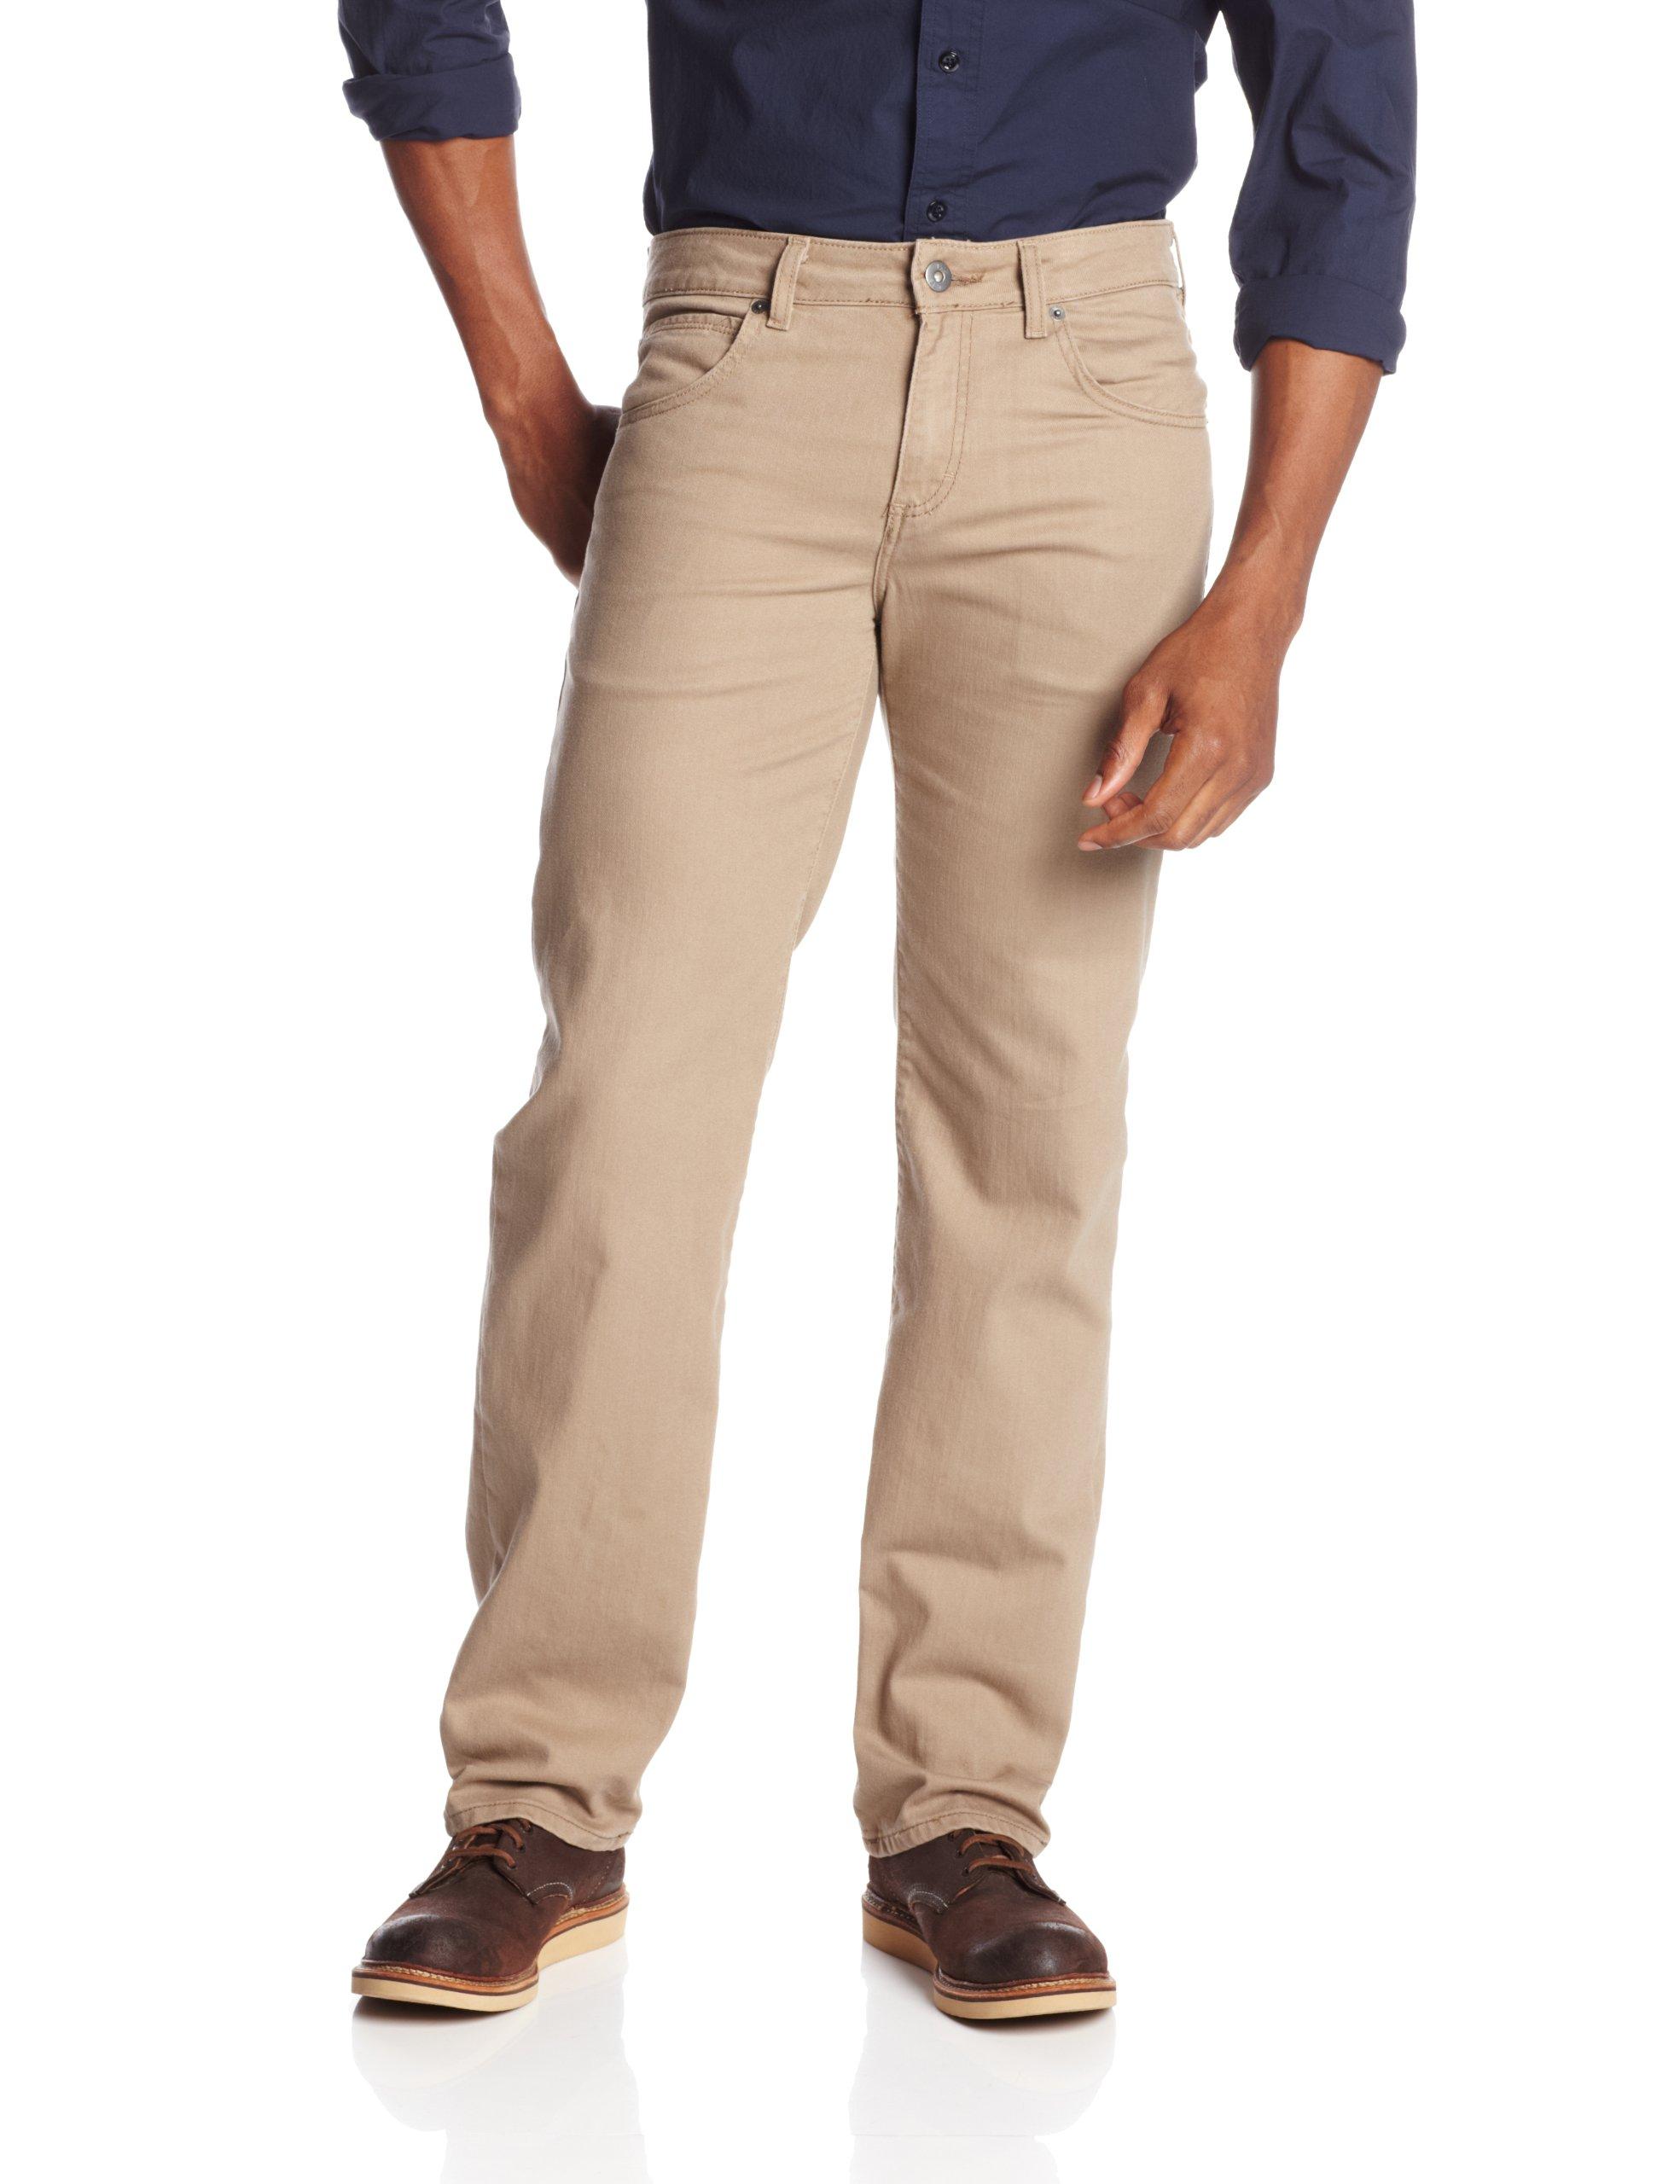 Lee Jeans Denim Modern Series Straight-fit Jean for Men - Save 21% - Lyst